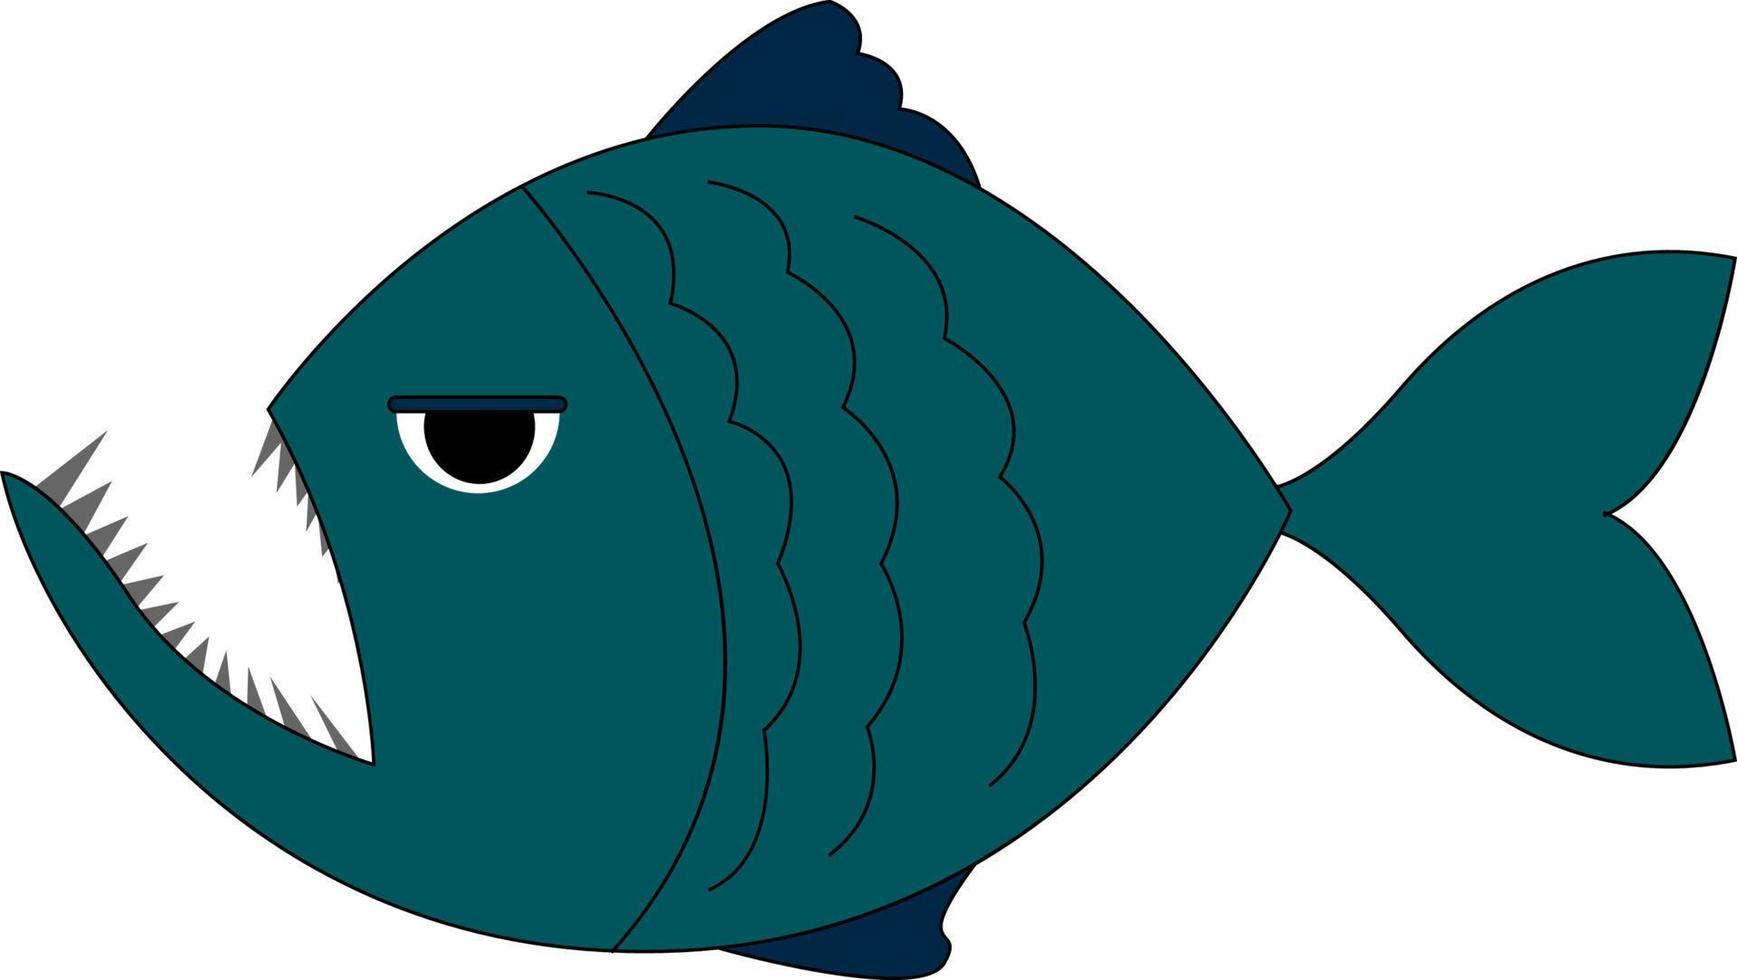 piranha bleu, illustration, vecteur sur fond blanc.